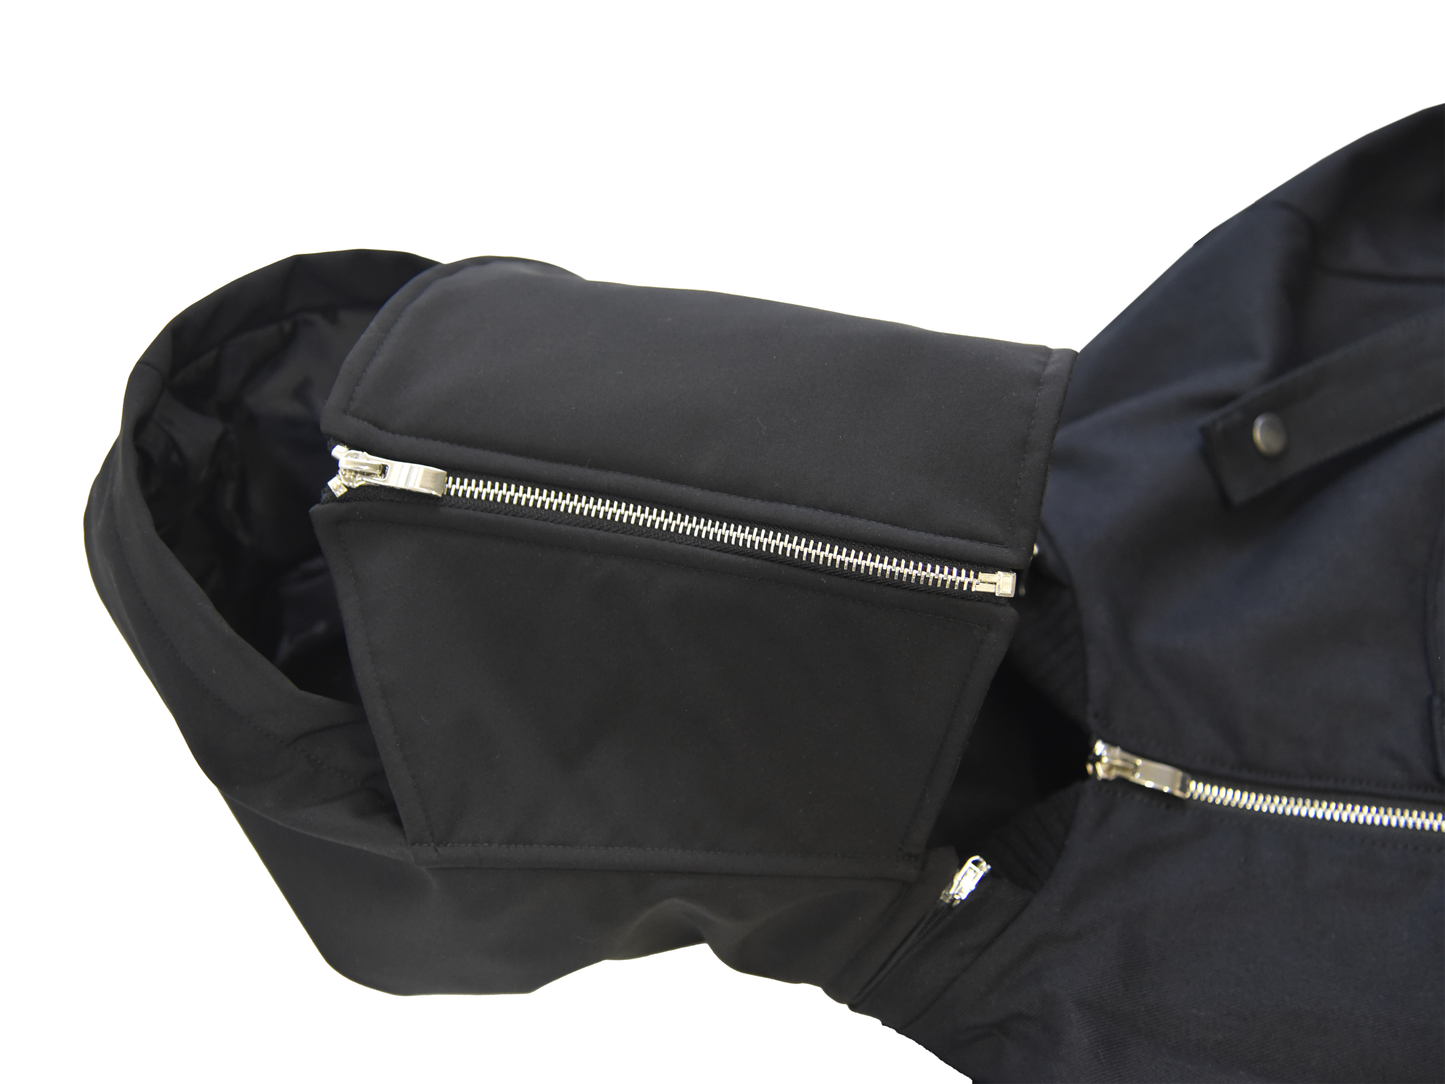 Technical Bomber Jacket with Detachable Bag & Hood